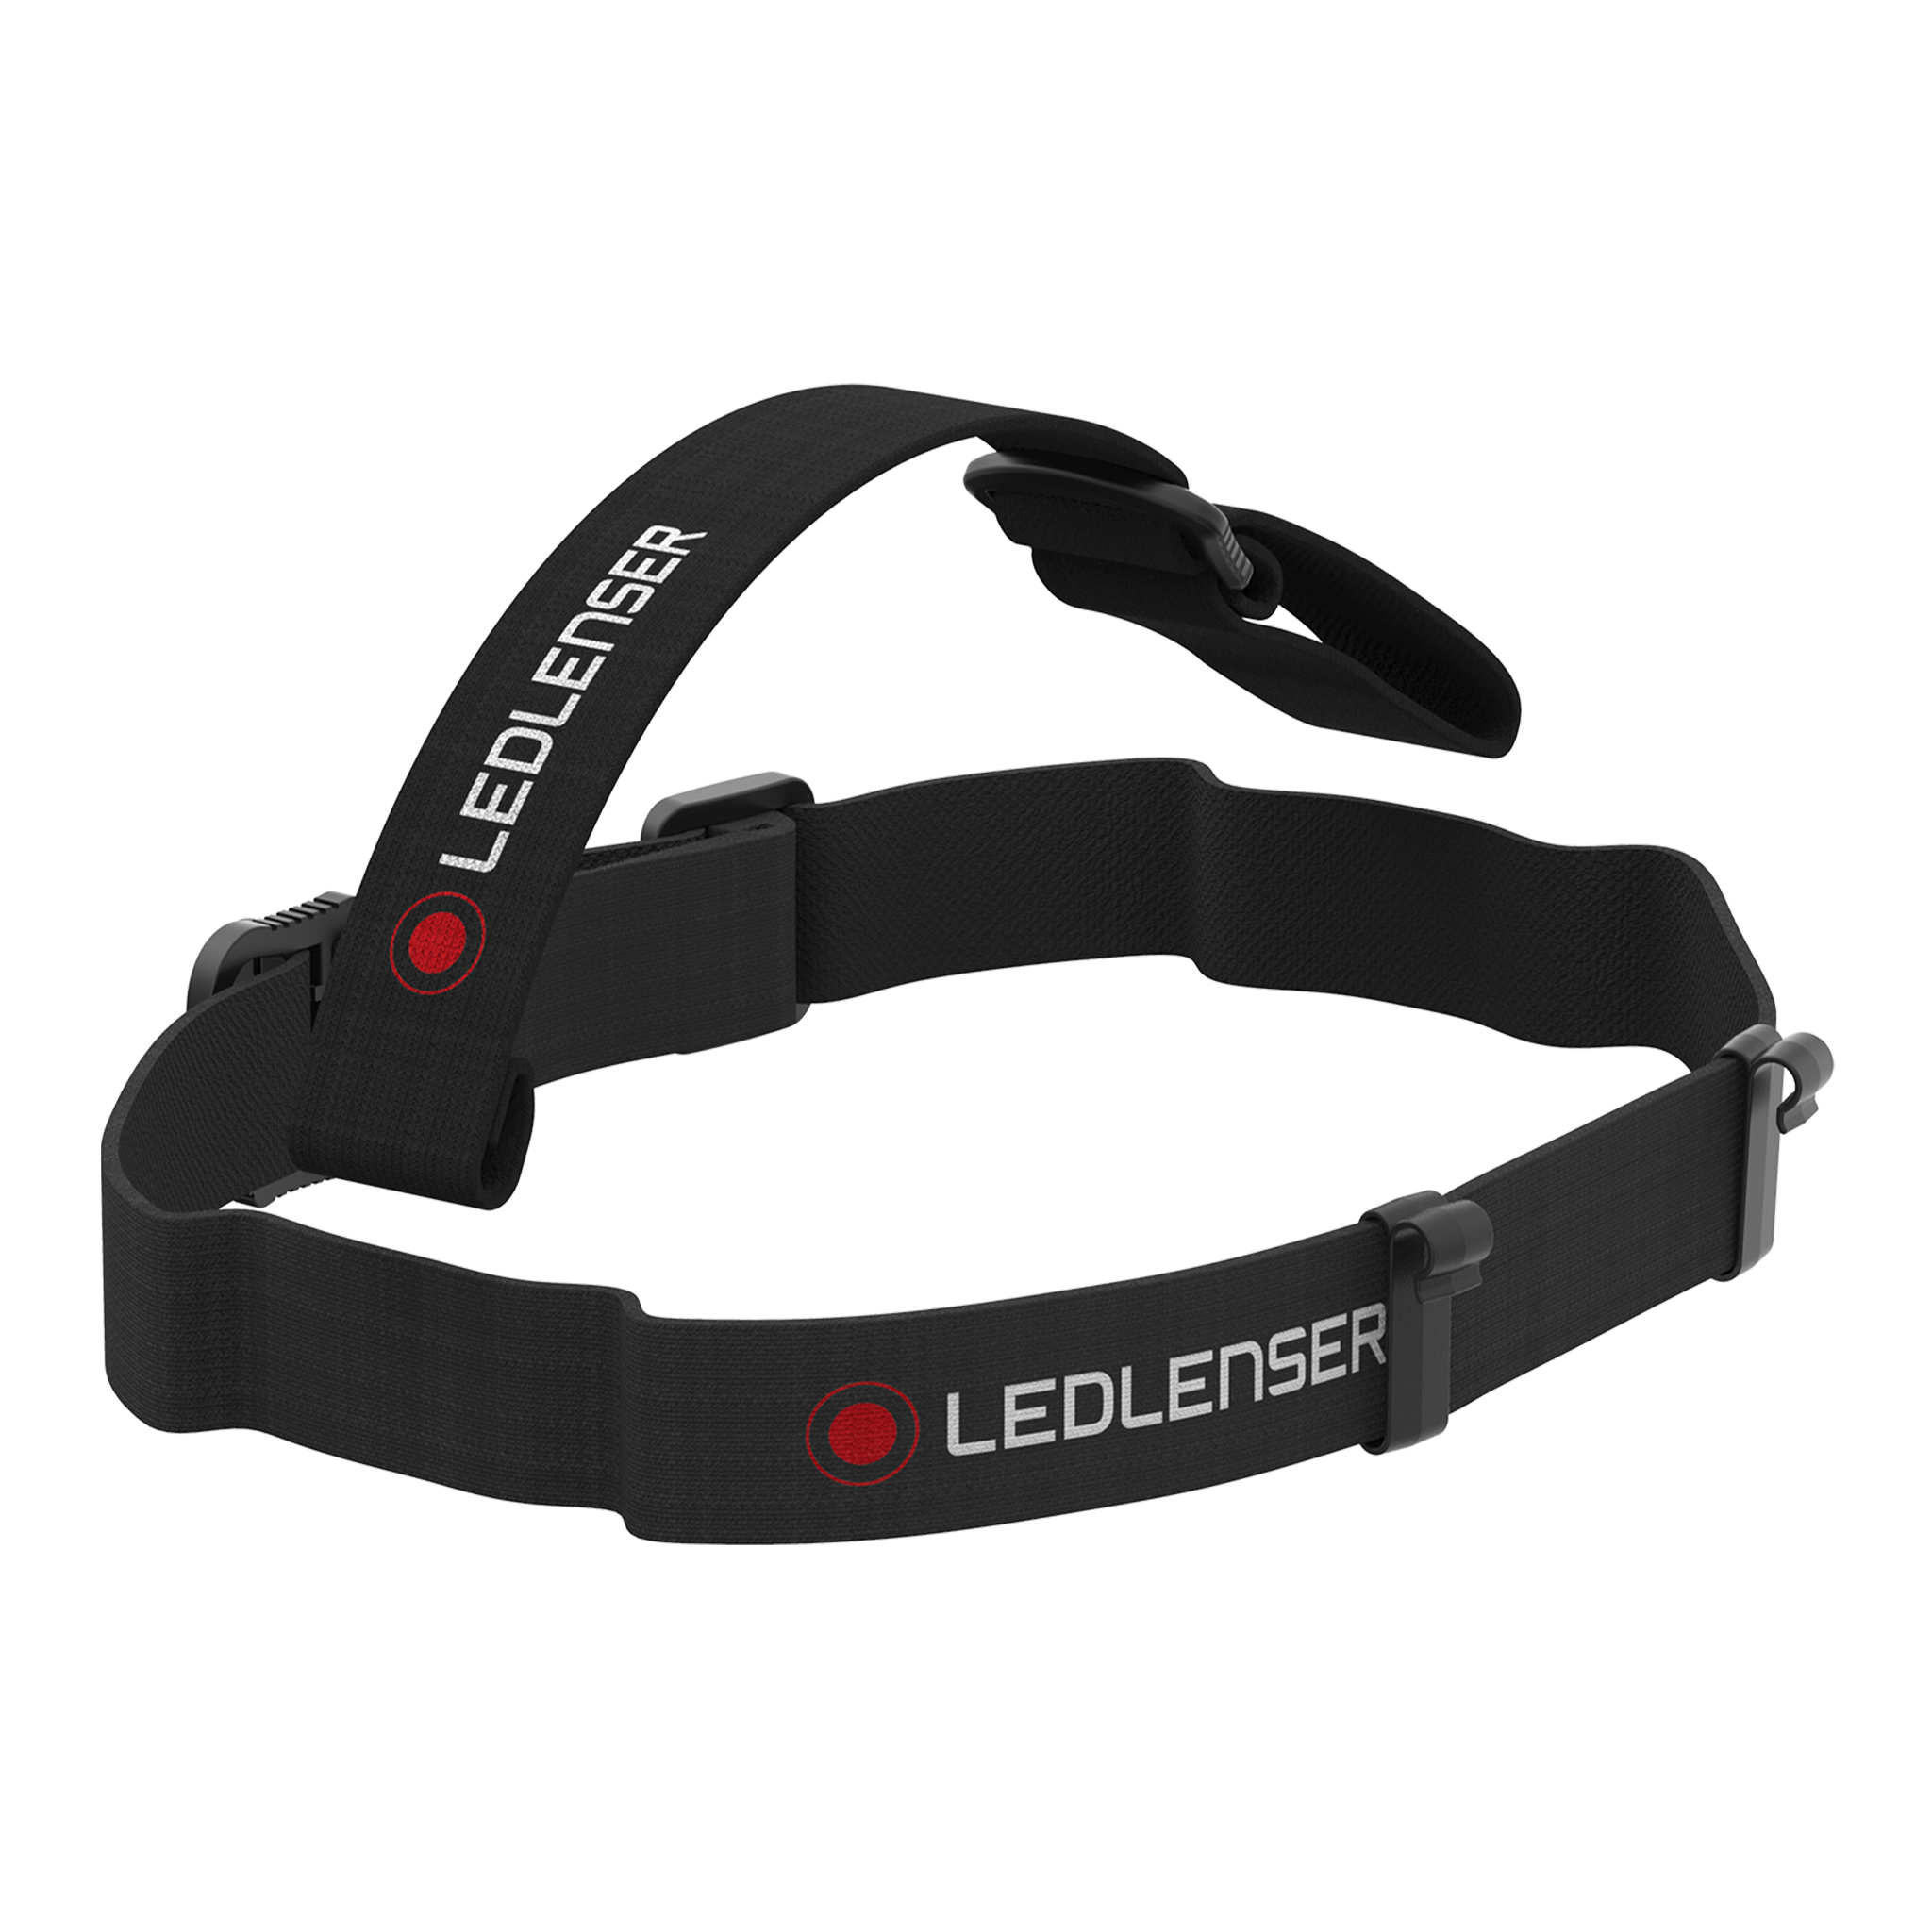 Replacement Ledlenser Branded Headband & Overhead-band - Core Series headlamps